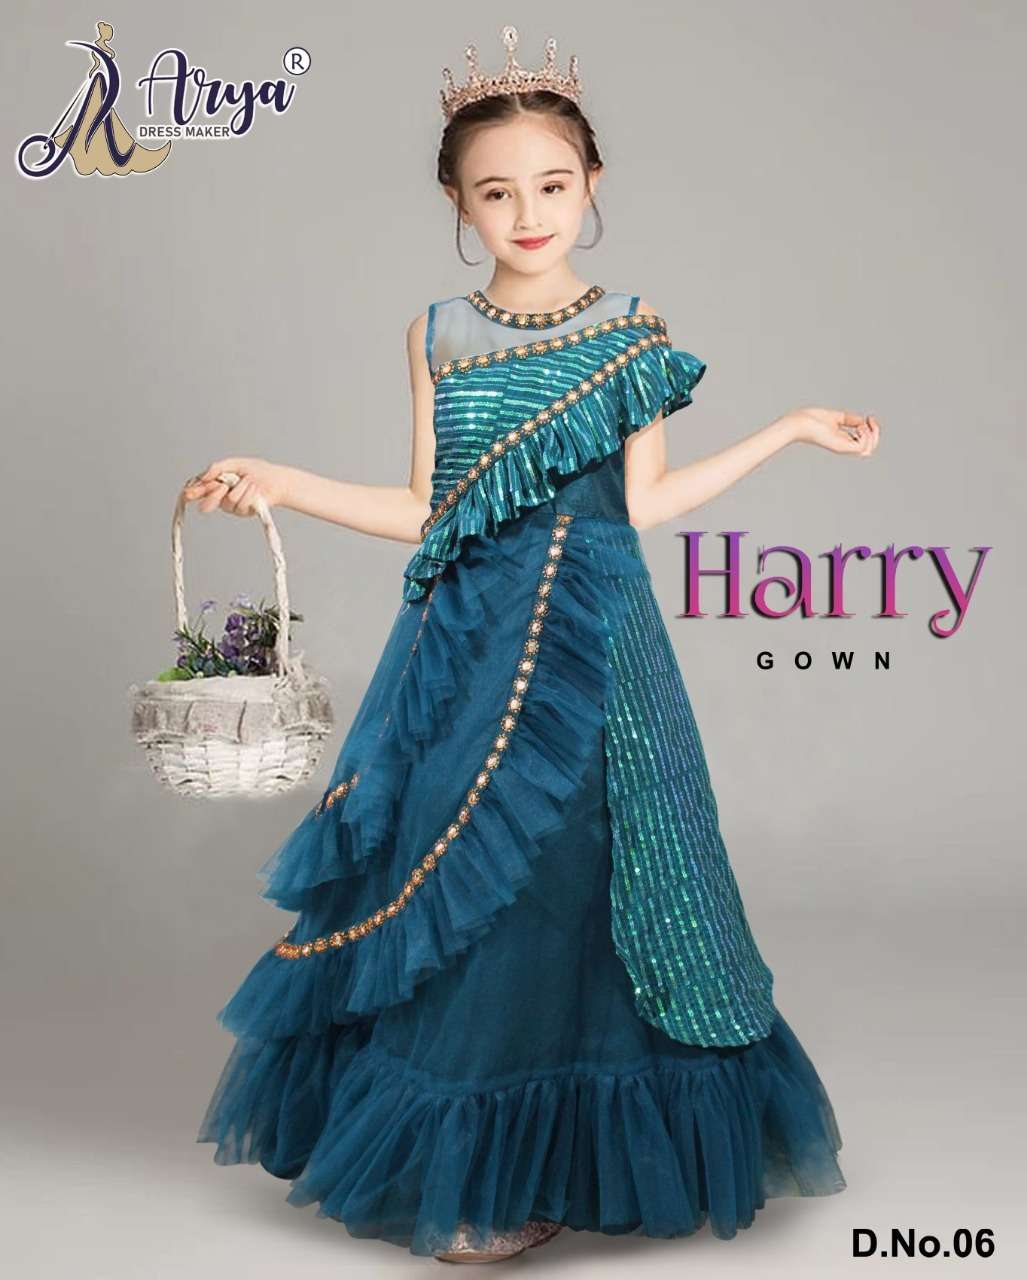 Arya Dress Maker 06 Harry Gown Blue Full Stiched Georgette Kids Wear